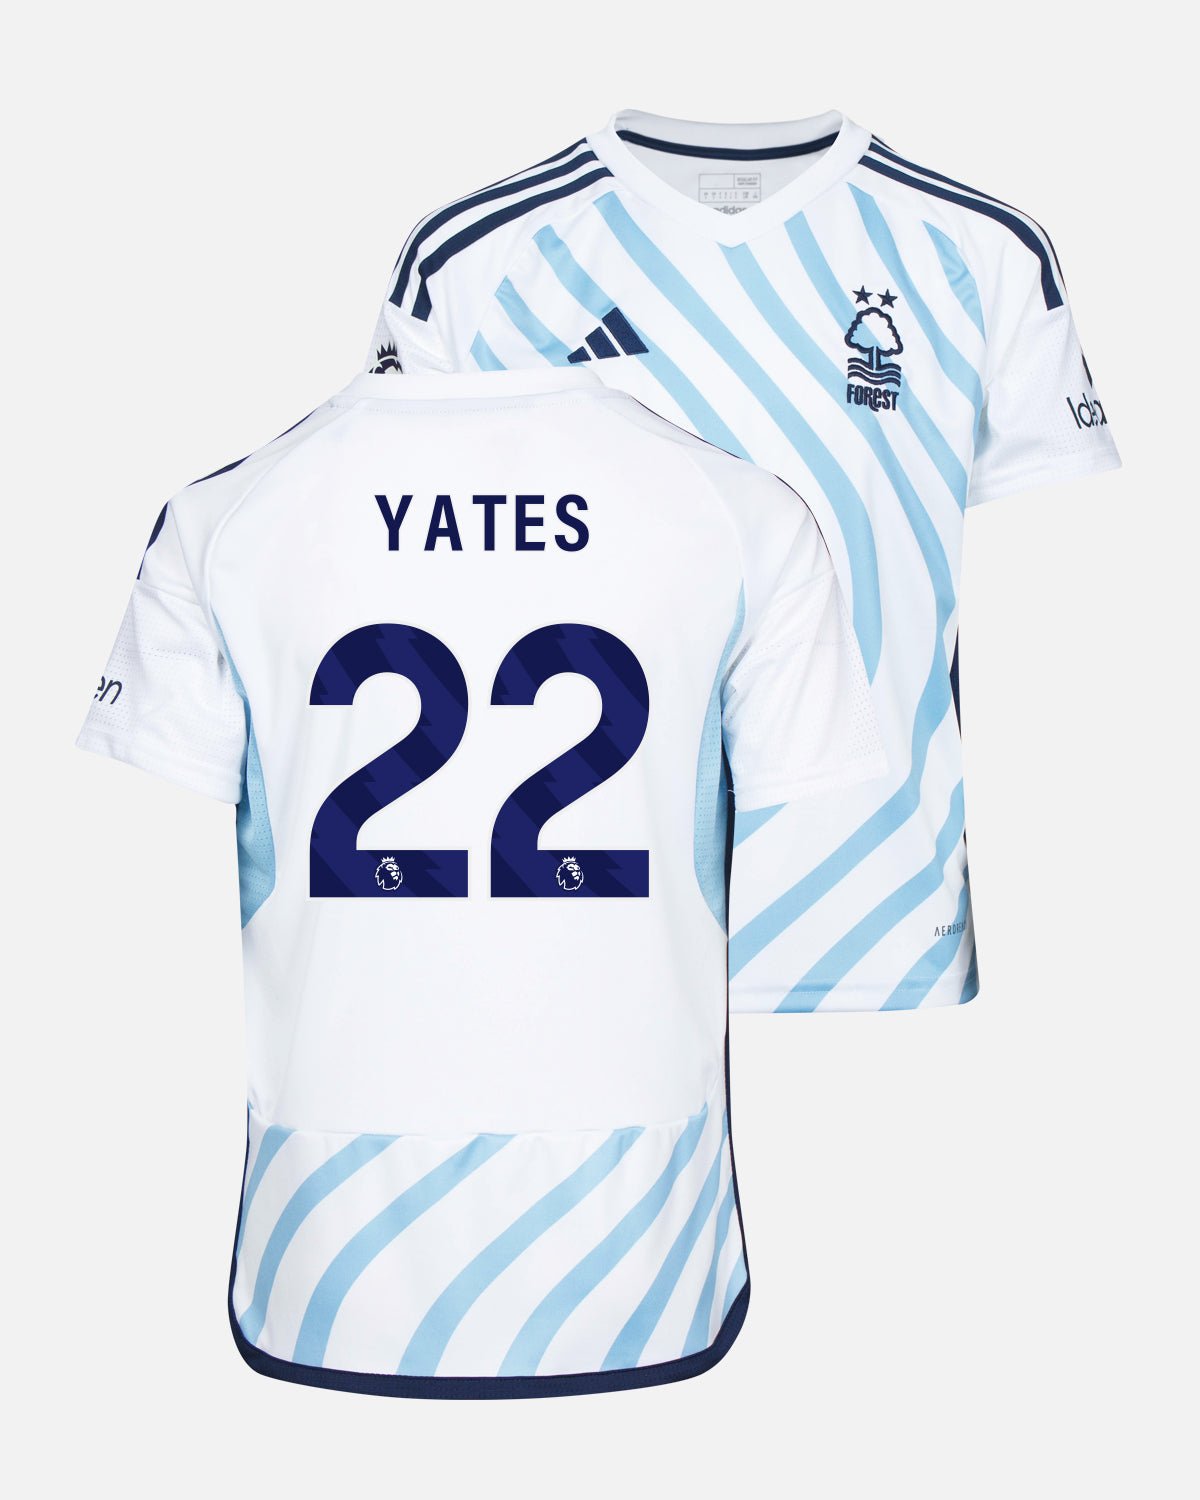 NFFC Junior Away Shirt 23-24 - Yates 22 - Nottingham Forest FC